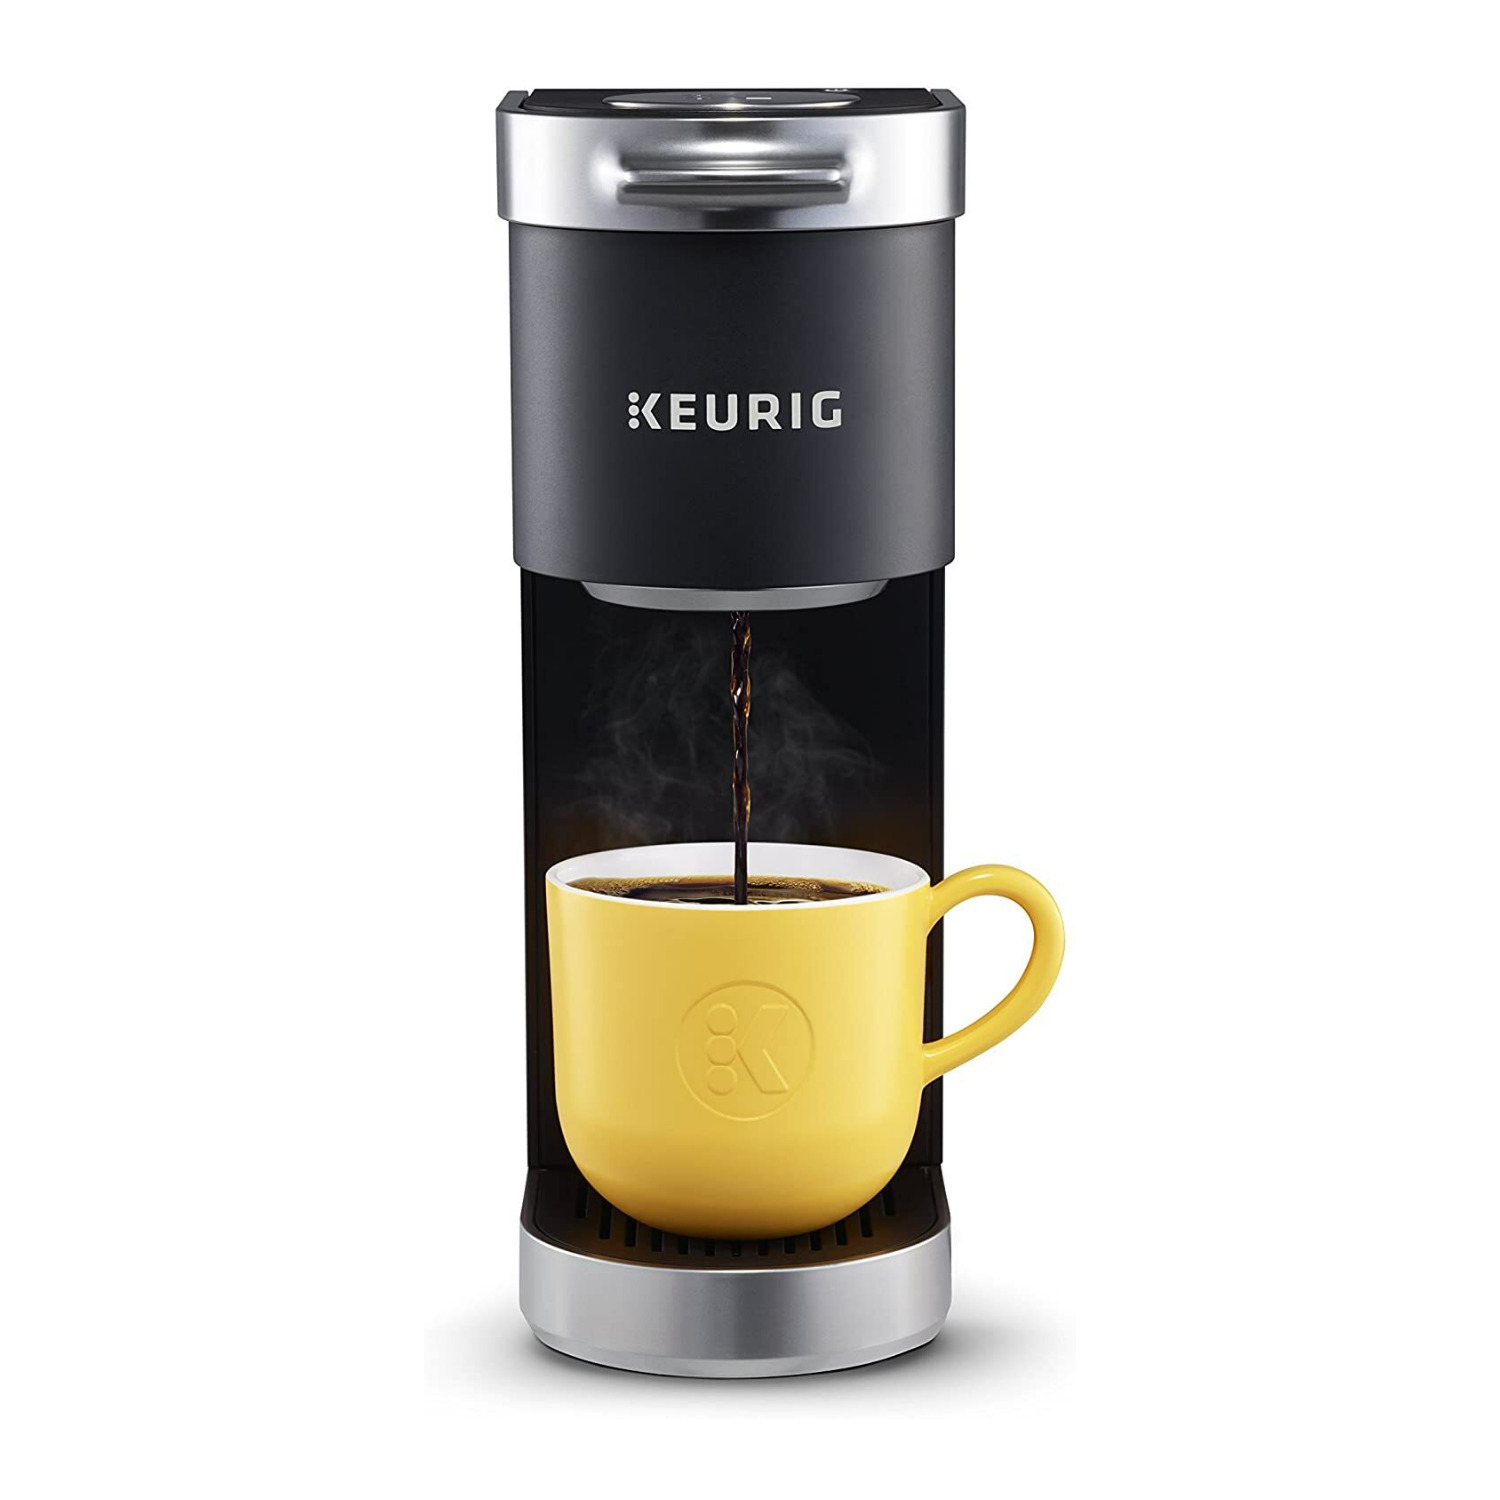 Keurig K-Mini Plus Single Serve Coffee Maker (Black) with Accesories - image 4 of 11